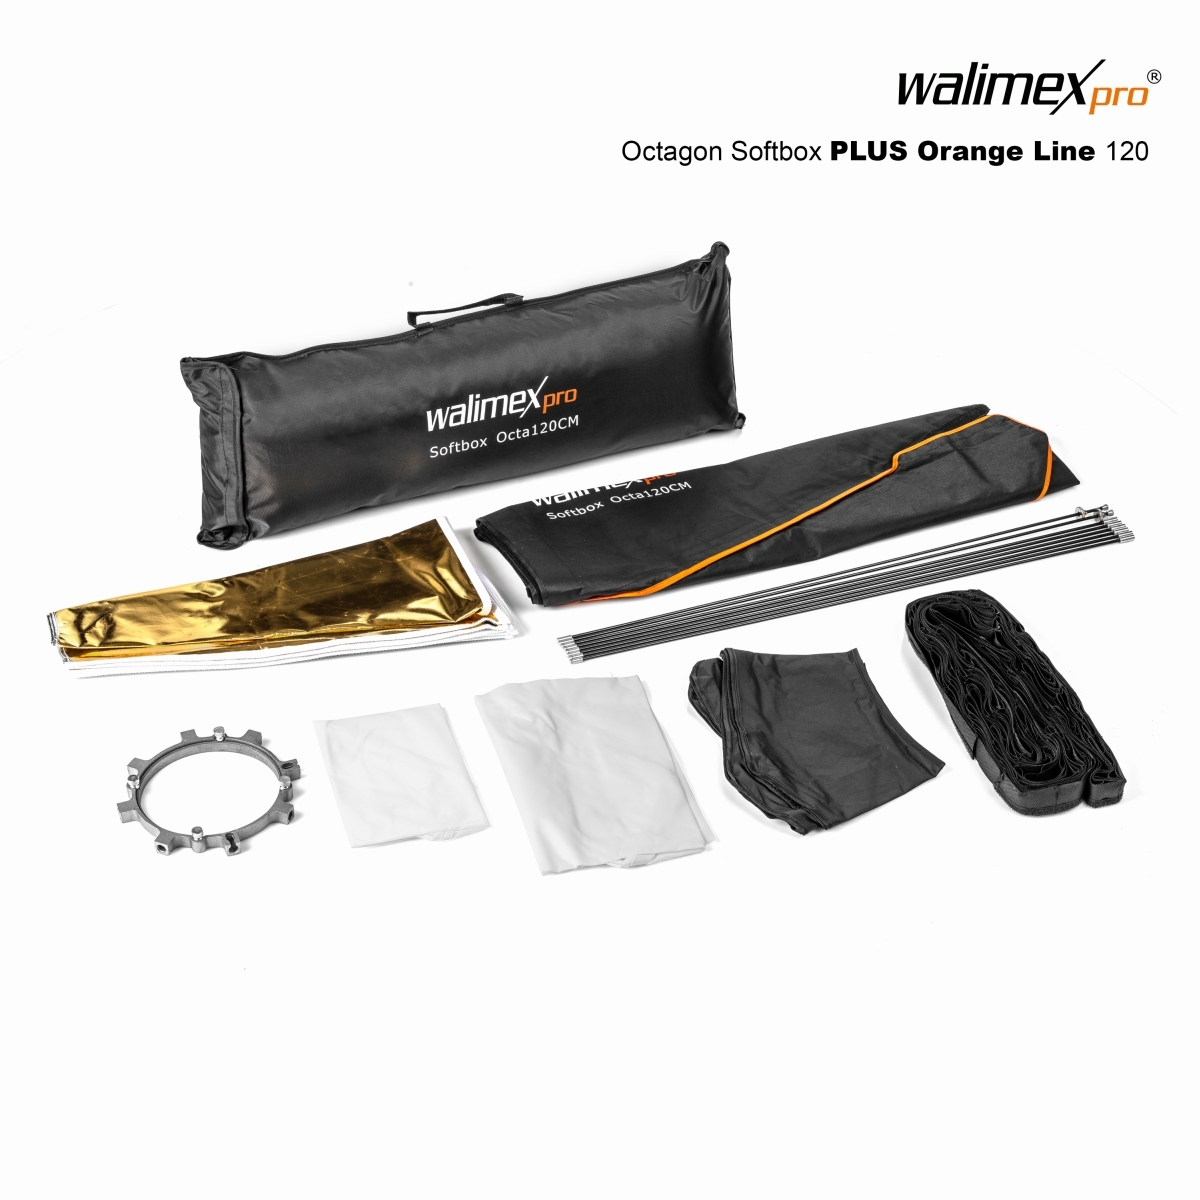 Walimex pro Octagon Softbox PLUS Orange Line 120